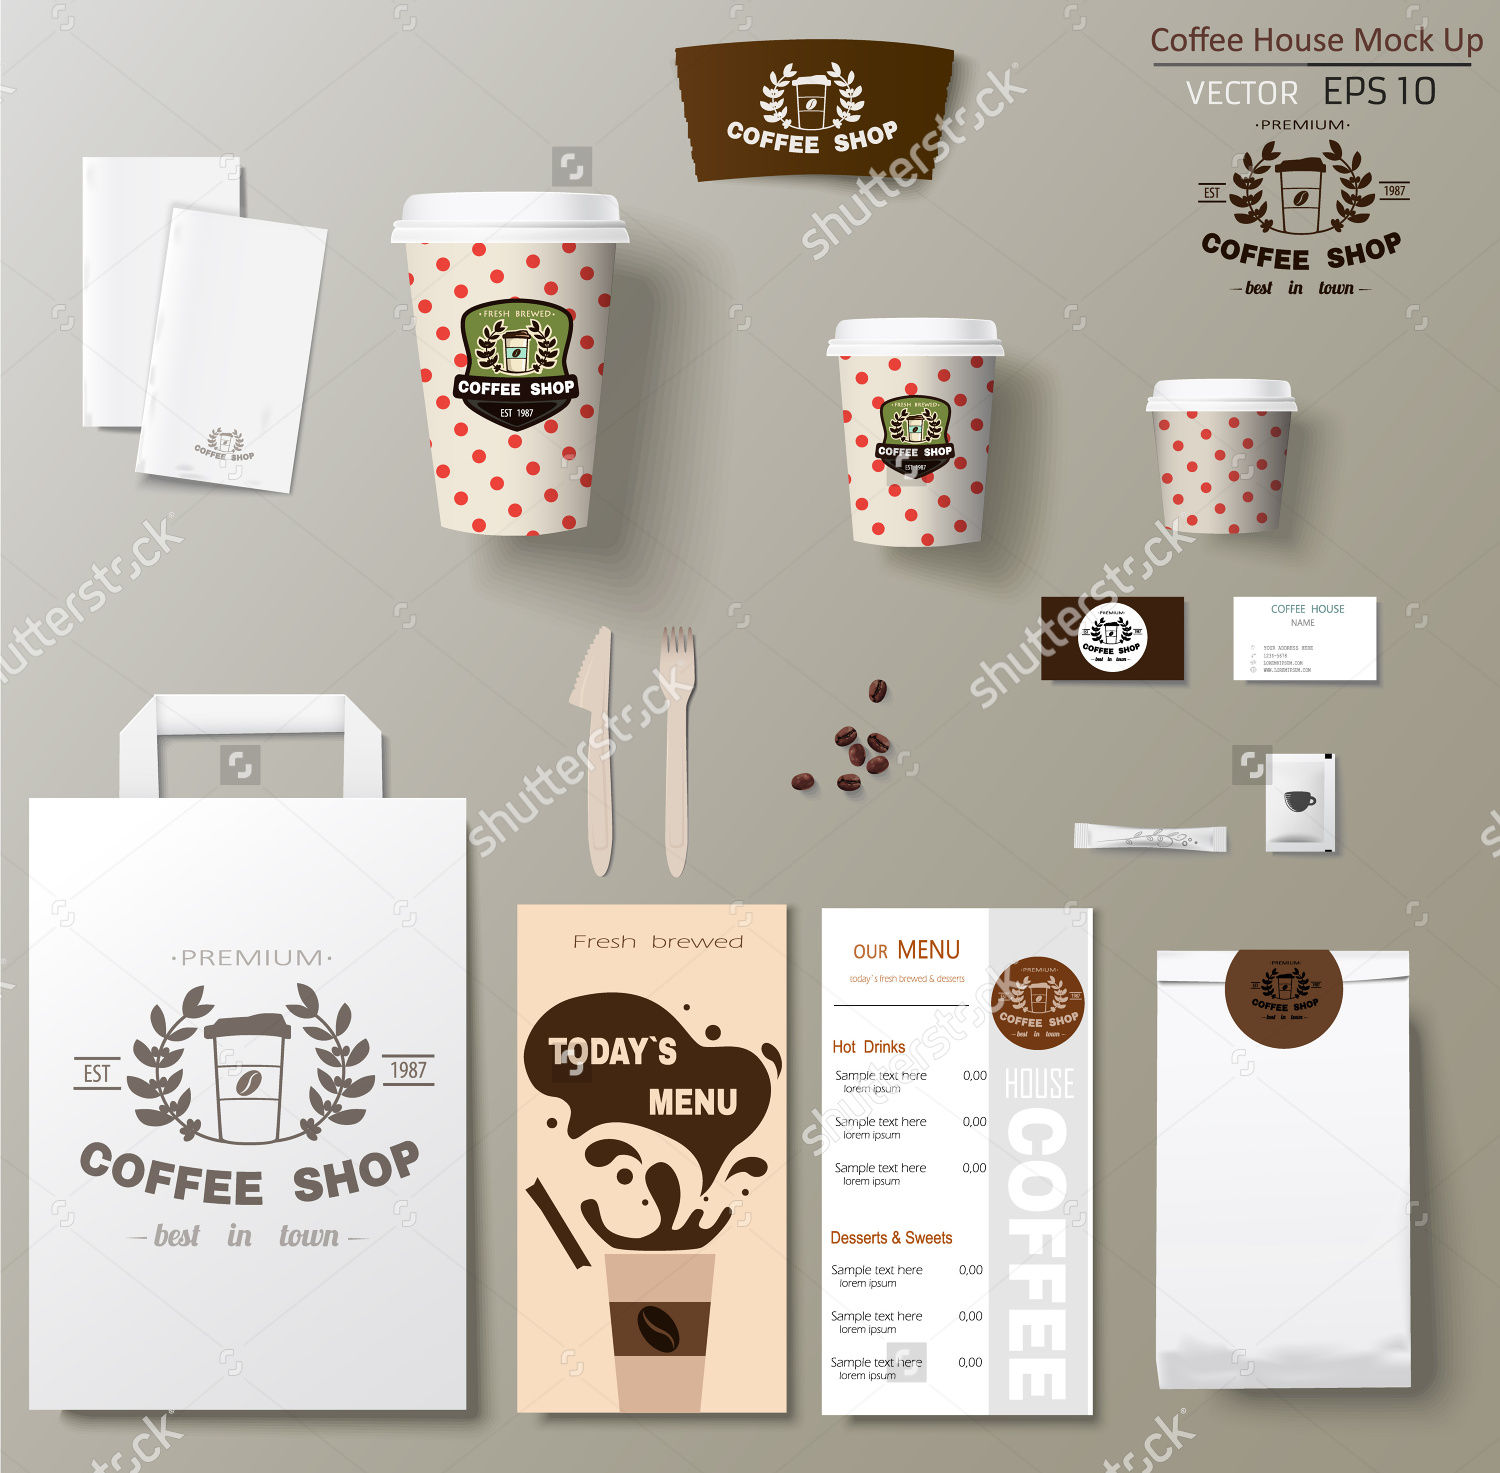 Download 9+ Coffee Branding Mockup Designs - PSD, AI Download | Design Trends - Premium PSD, Vector Downloads